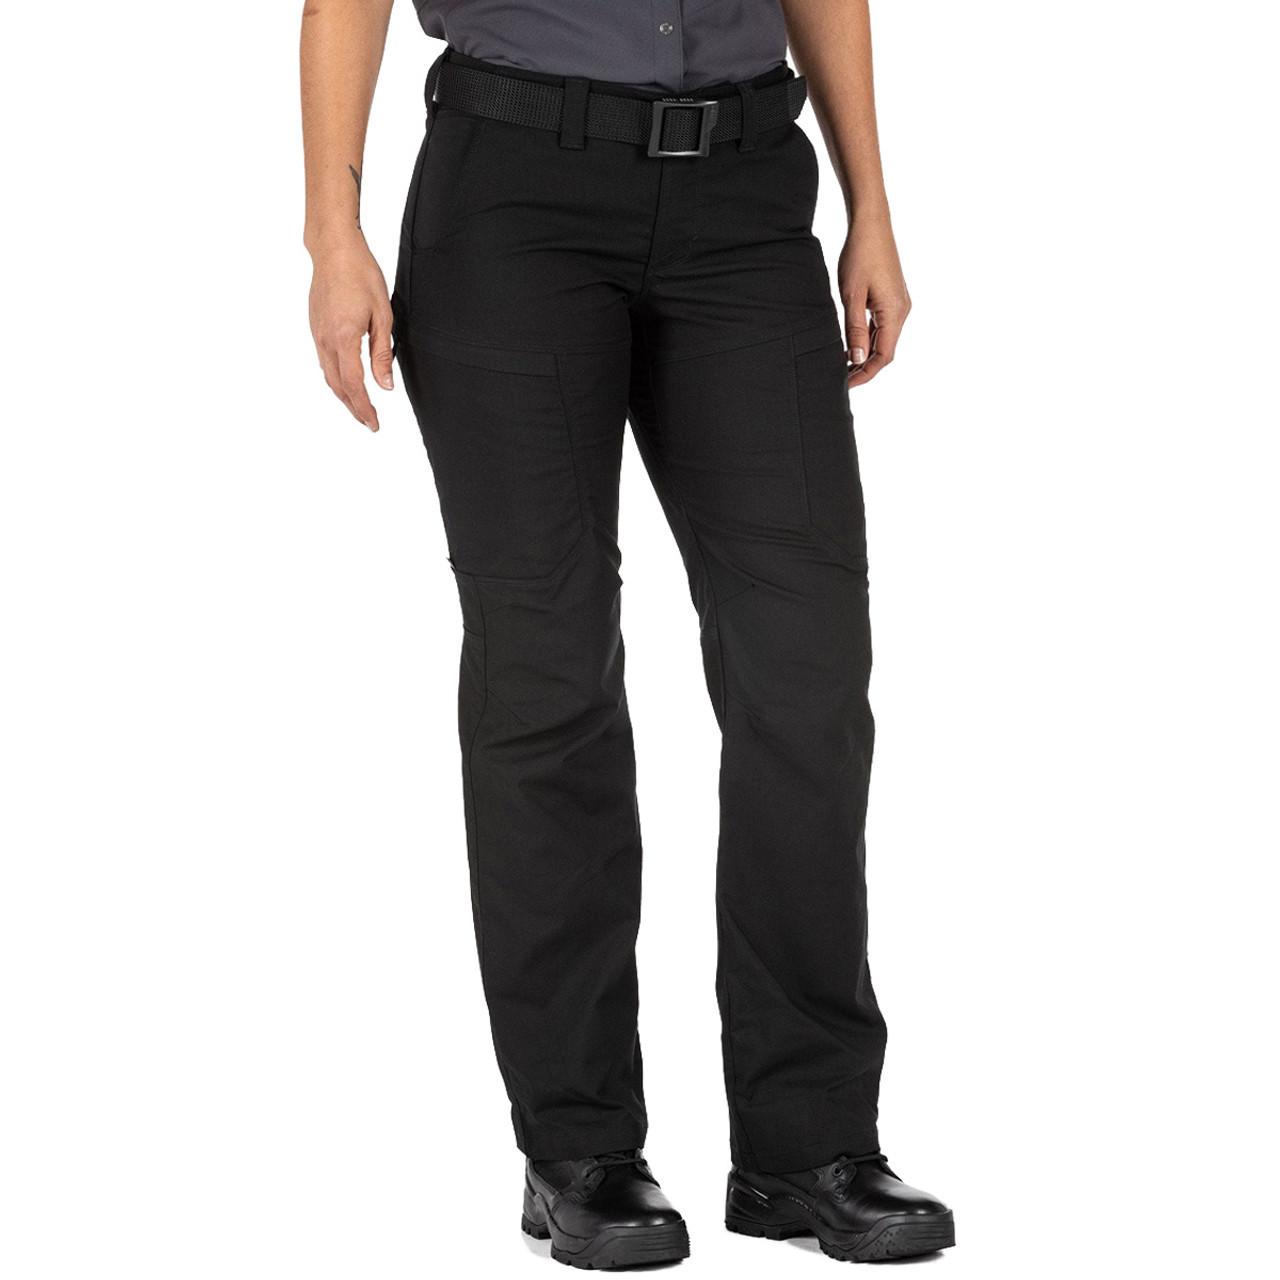 Women's Apex Pant: High-Performance Flex-Tac® Pants